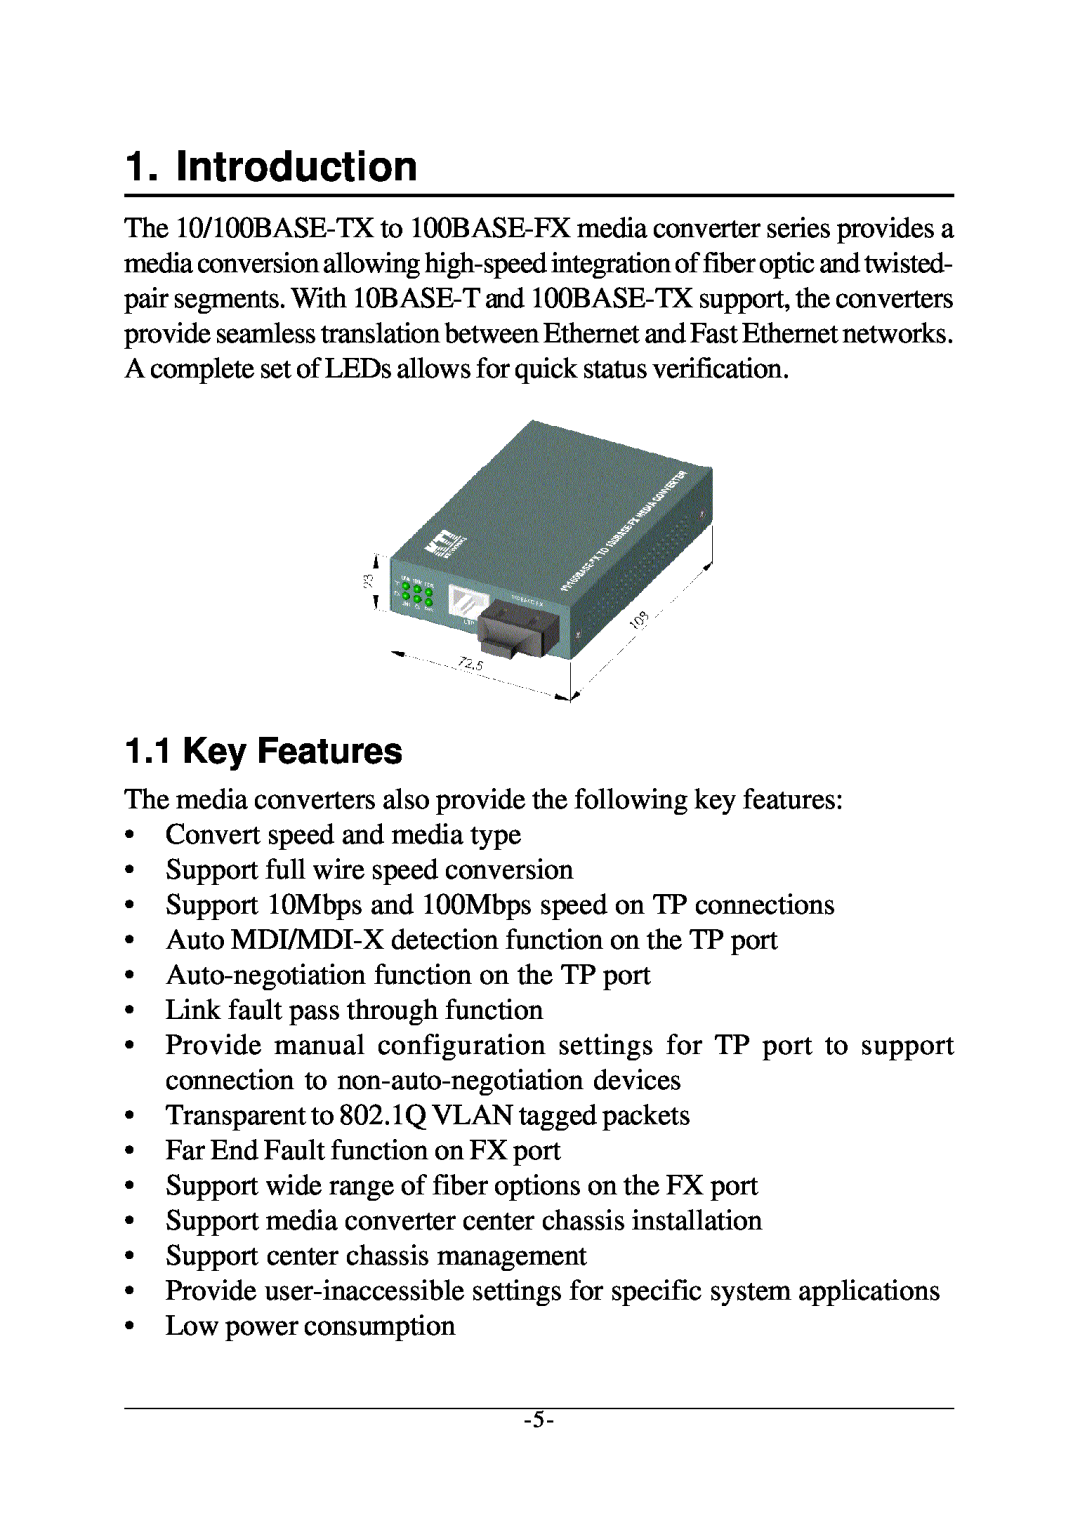 KTI Networks KC-300D manual Introduction, Key Features 